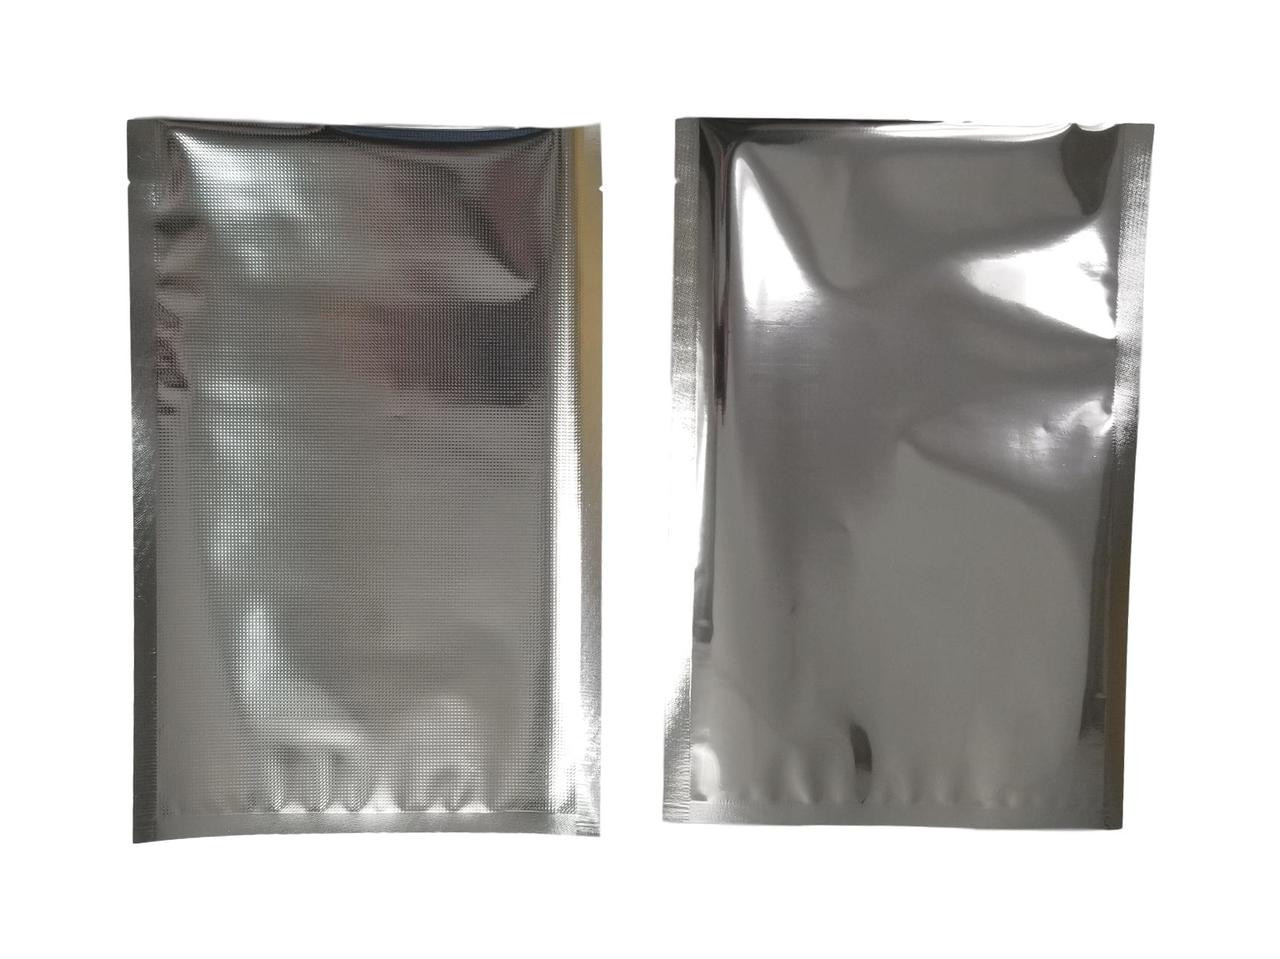 11?x14? SteelPak textured/embossed Mylar Aluminum Foil Vacuum Sealer Bags - One Gallon Size Hot Seal Commercial Grade Food Sealer Bags for Food